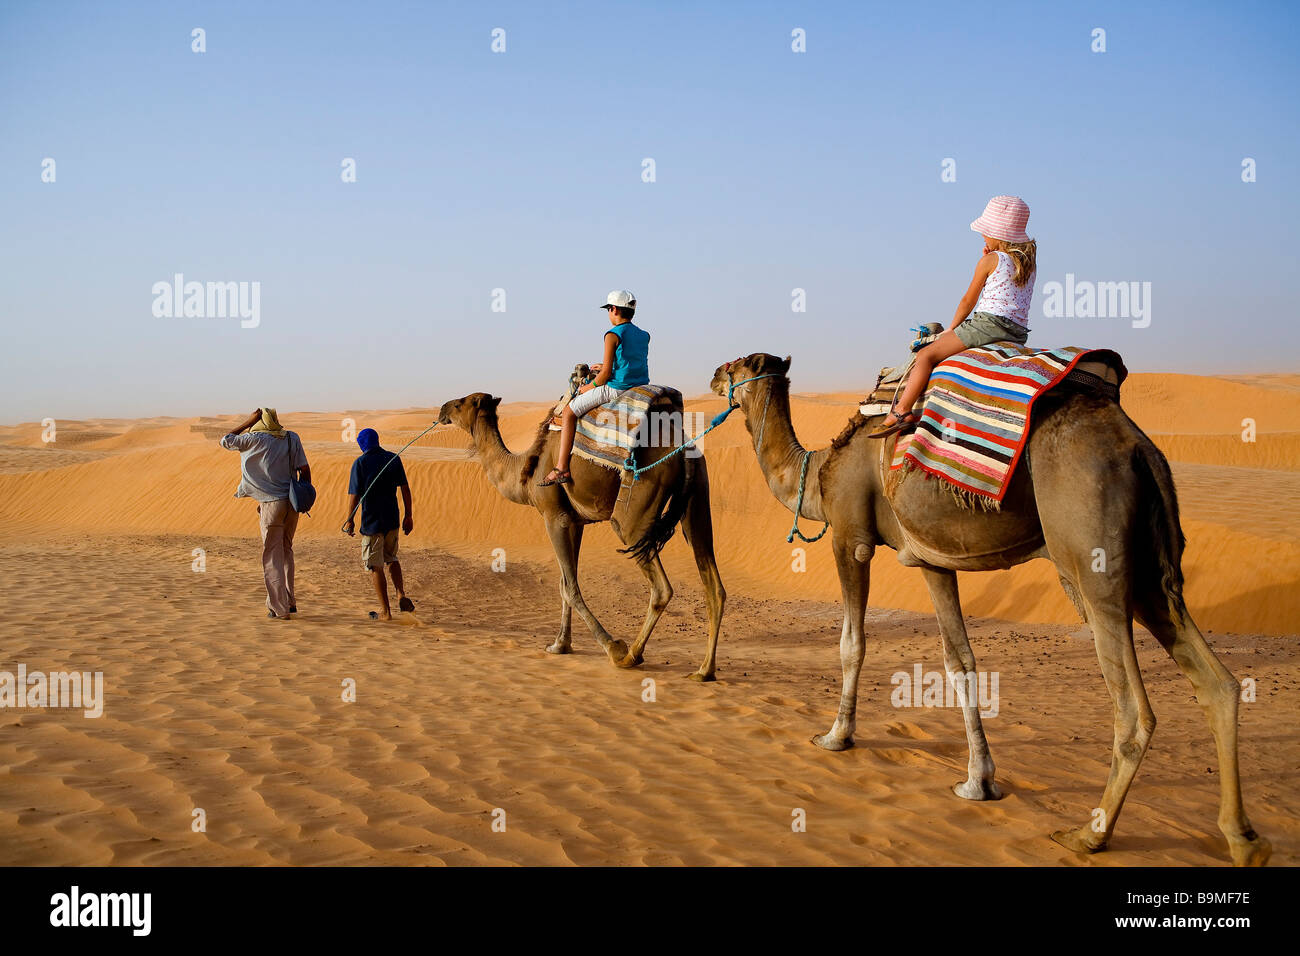 Tunisia, Southern Tunisia, Ksar Ghilane oasis, Dromadery ride in the sand dunes Stock Photo